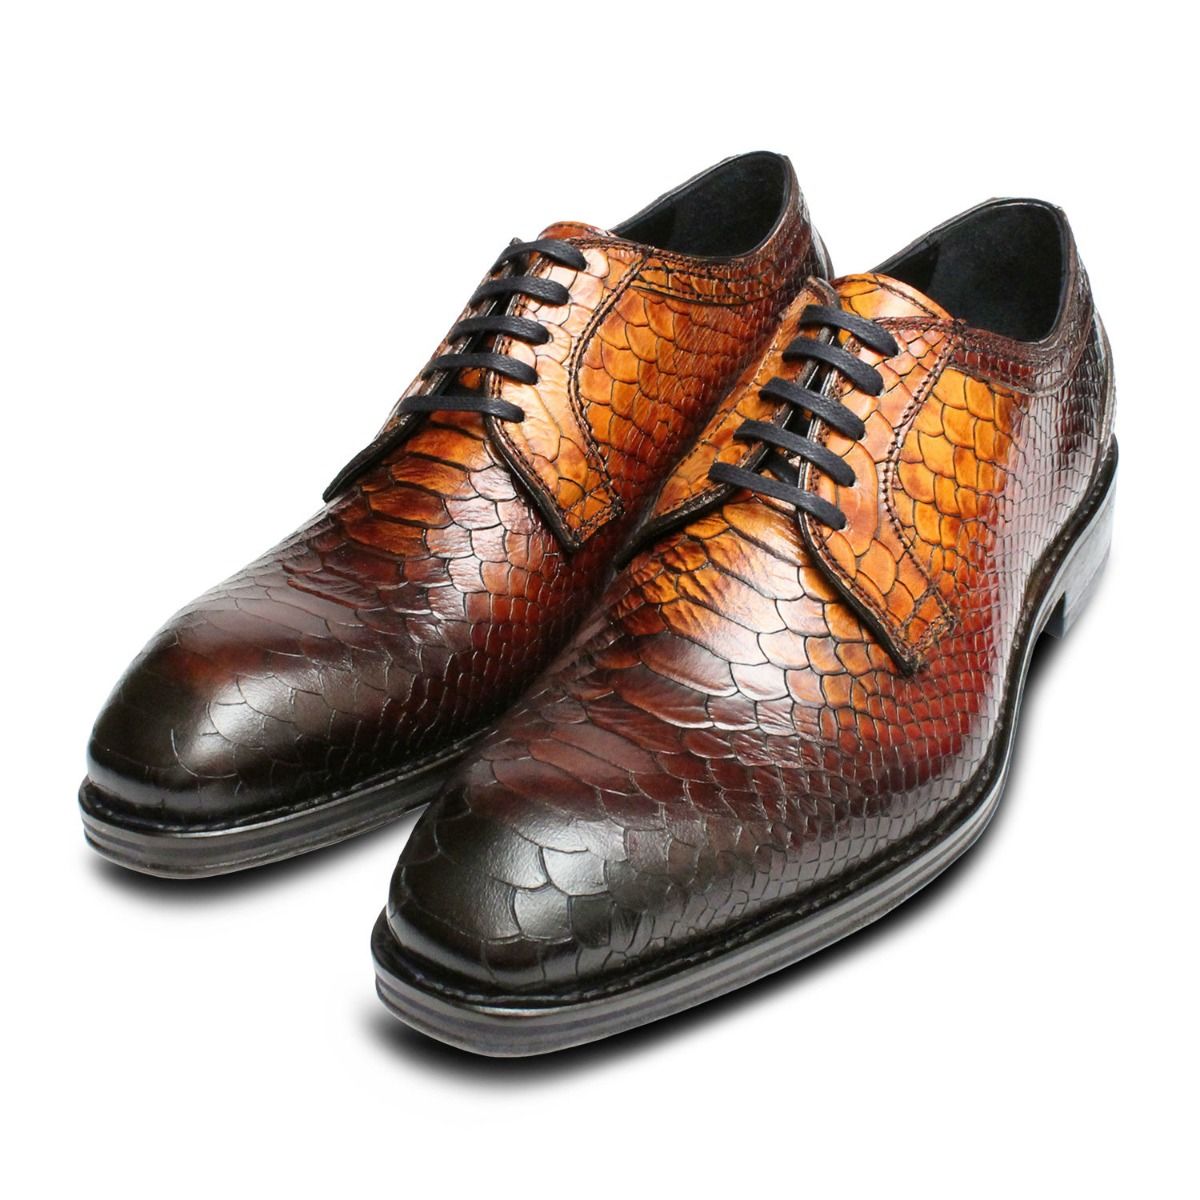 Luxury Brown Italian Snakeskin Shoes